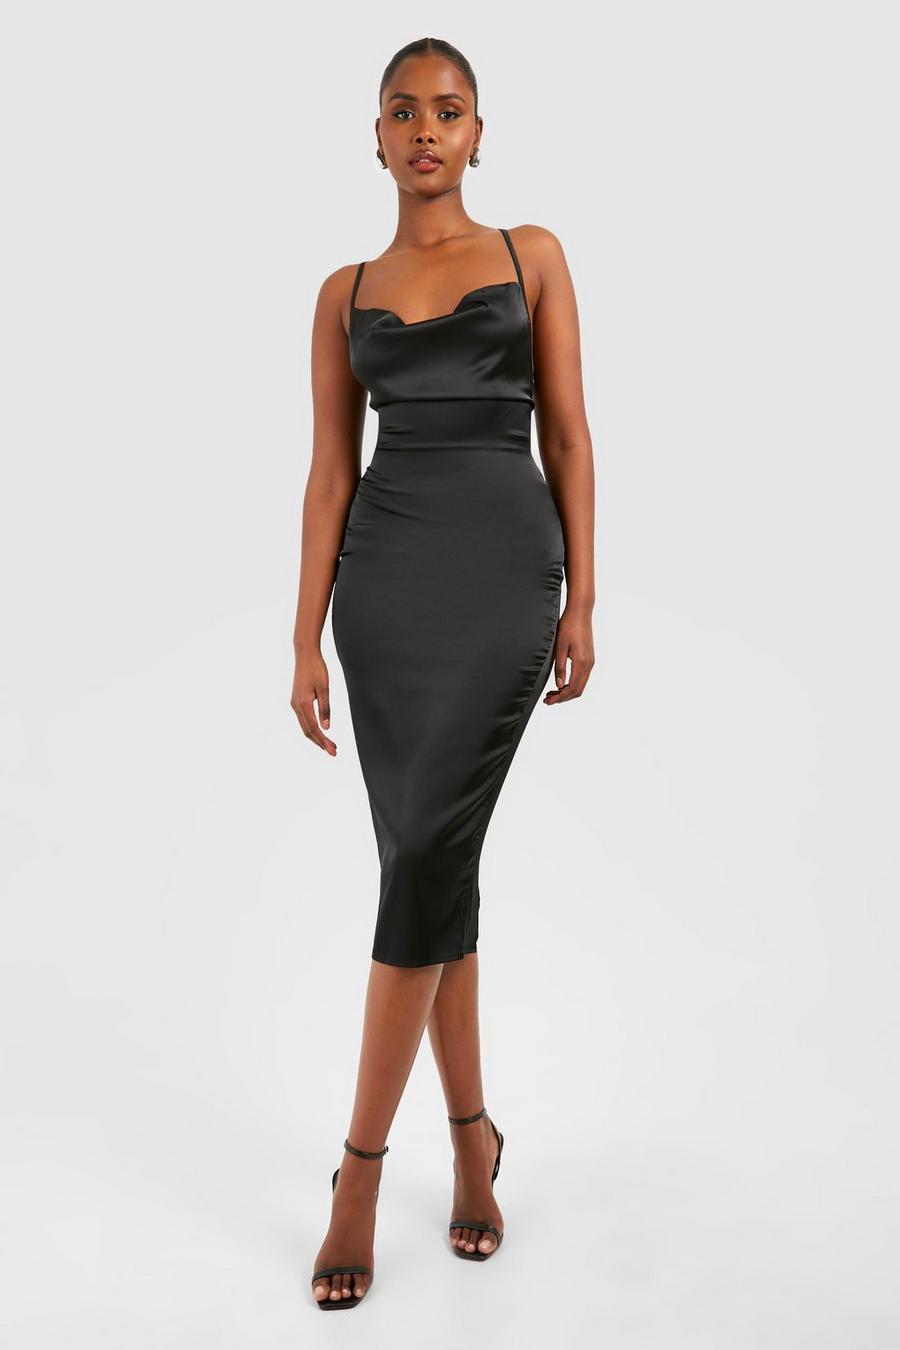 Black Midi Dress - Satin Cowl Neck Dress - High Side Slit Dress